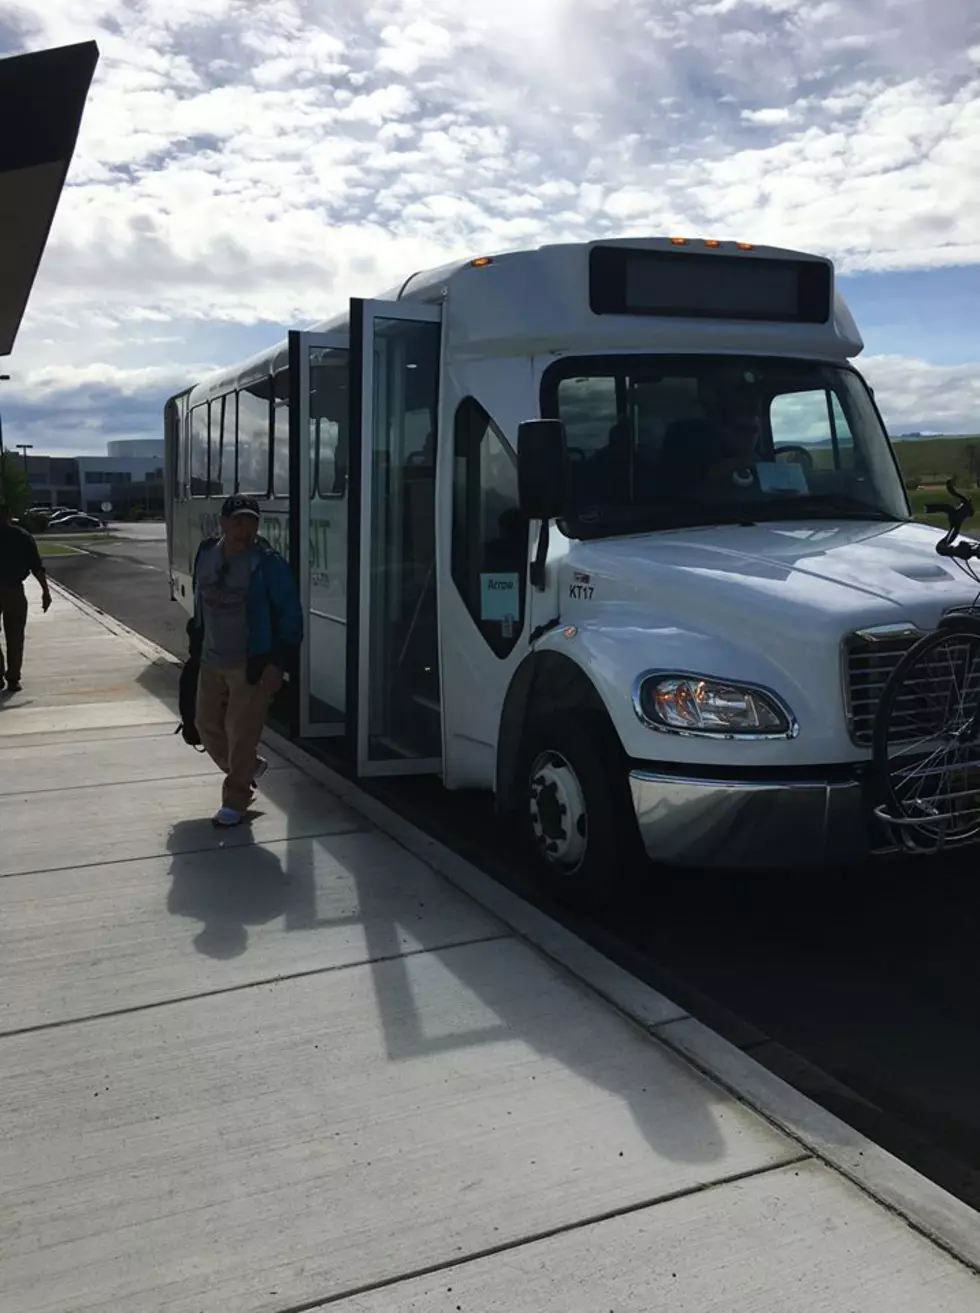 Hermiston’s Free Bus Service Sees Usage Increase